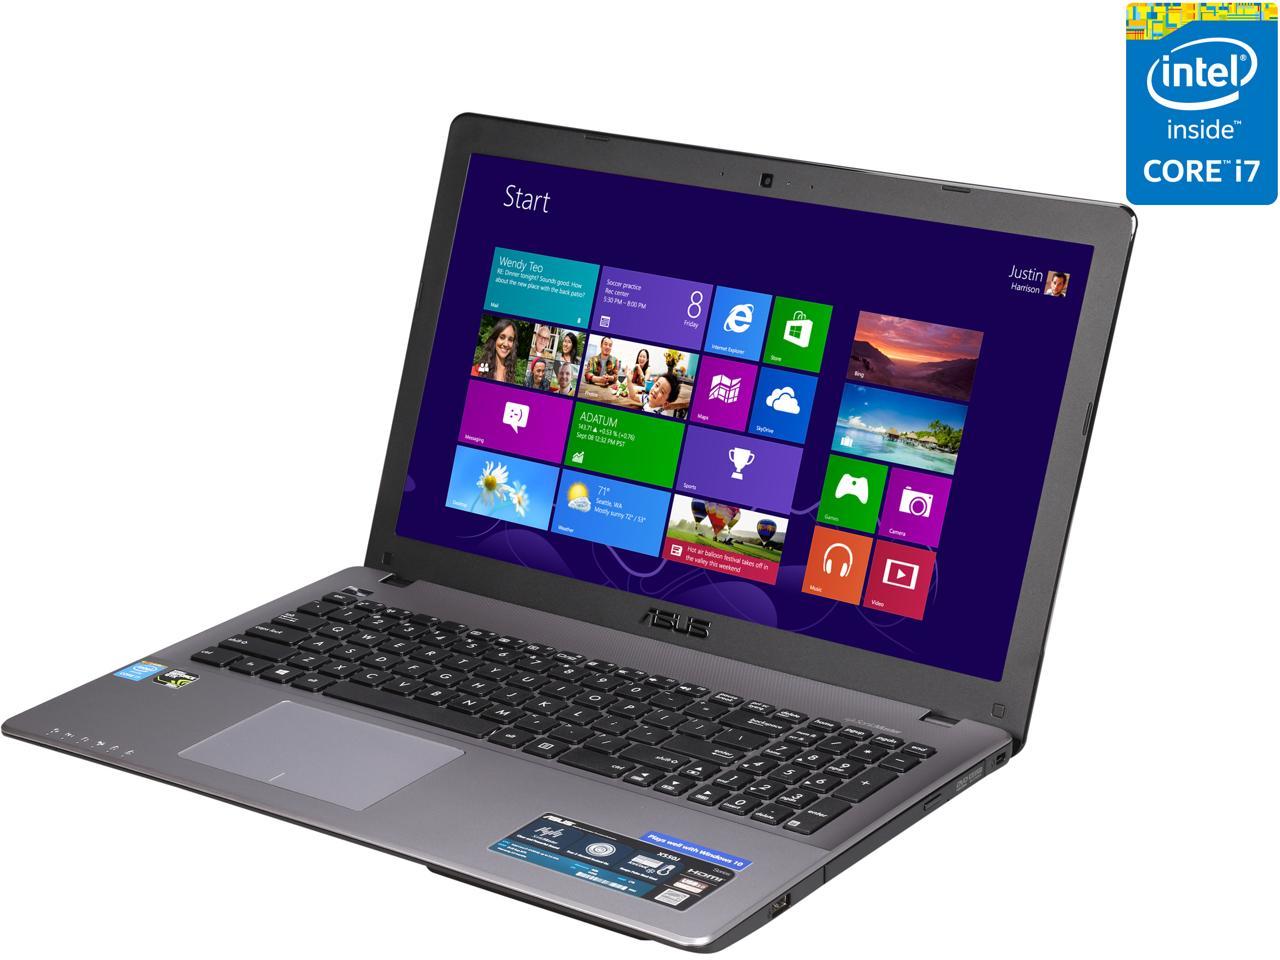 Geen ramp oogsten ASUS X550JX-DB71 Gaming Laptop 4th Generation Intel Core i7 4720HQ 2.60 GHz  8 GB Memory 1 TB HDD NVIDIA Geforce GTX 950M 2 GB Windows 8.1 64-bit -  Newegg.com